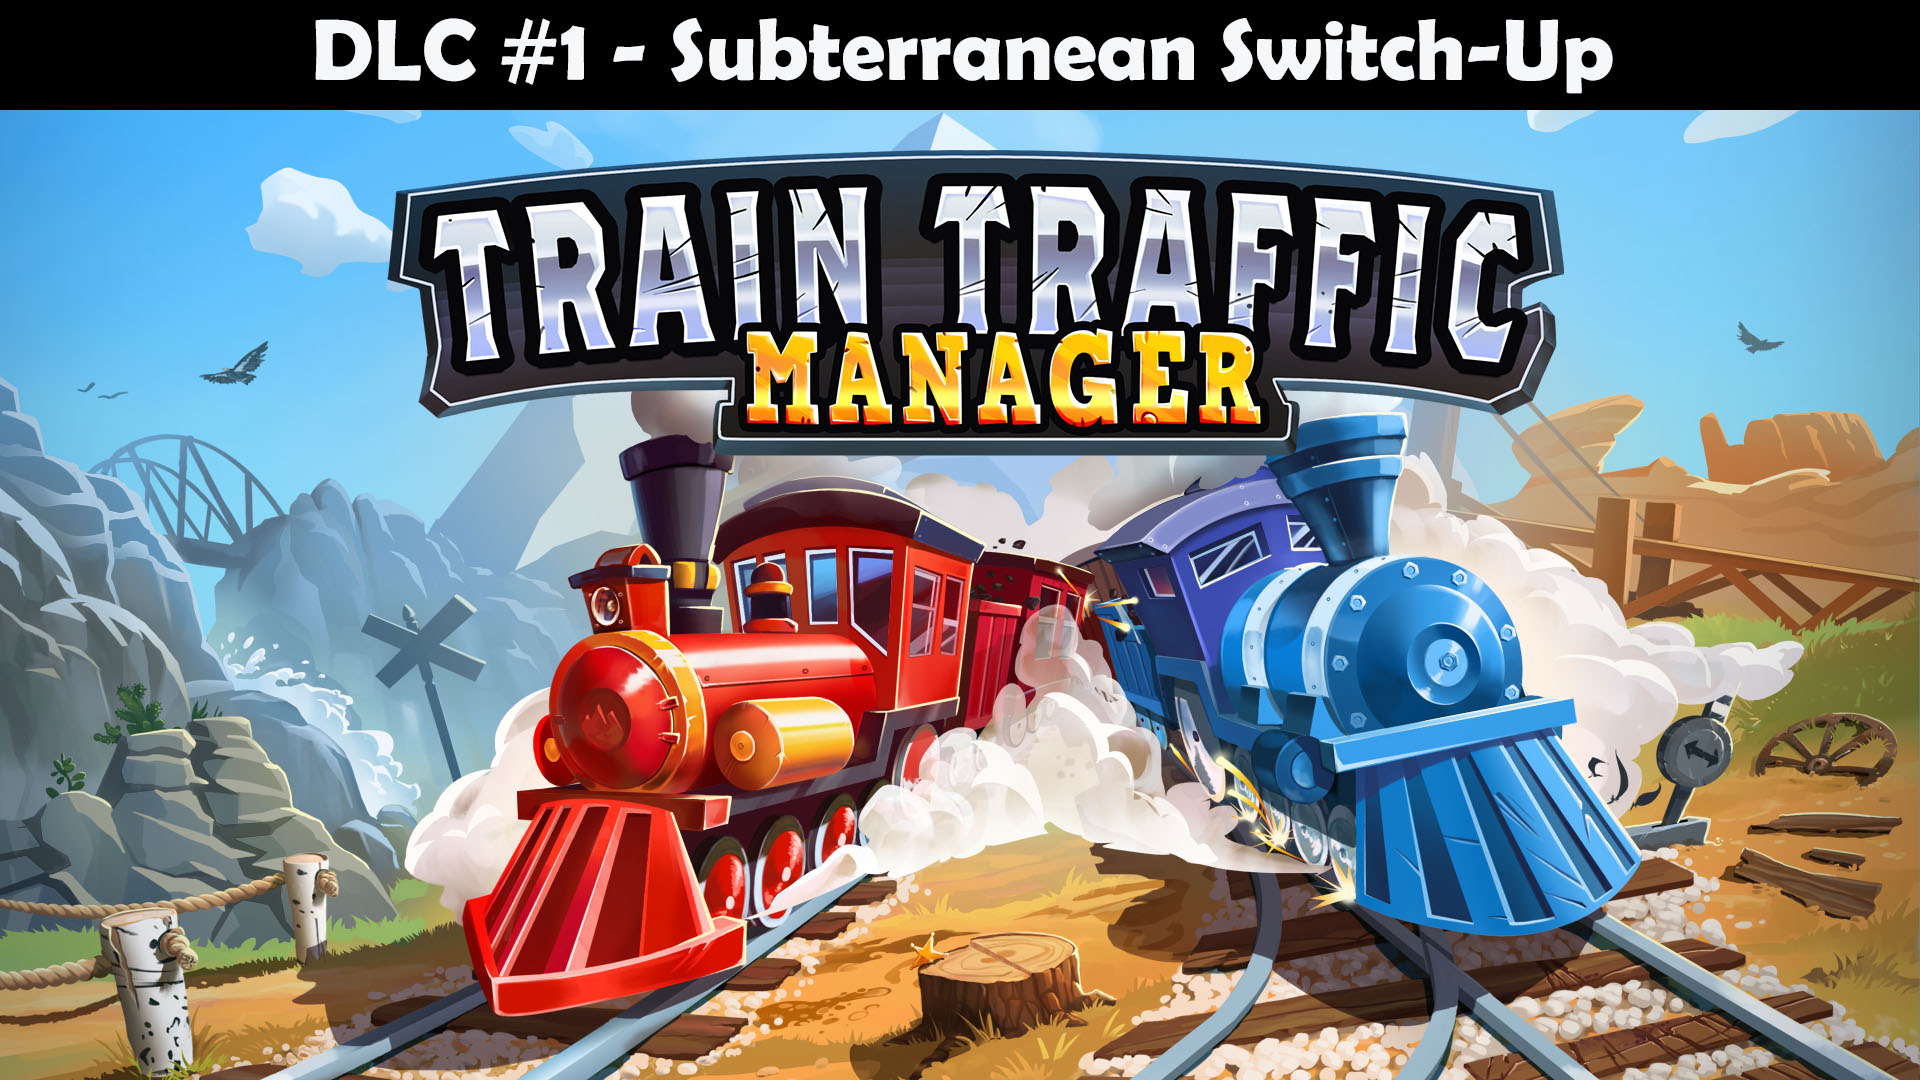 Train Traffic Manager DLC #1 - Subterranean Switch-Up